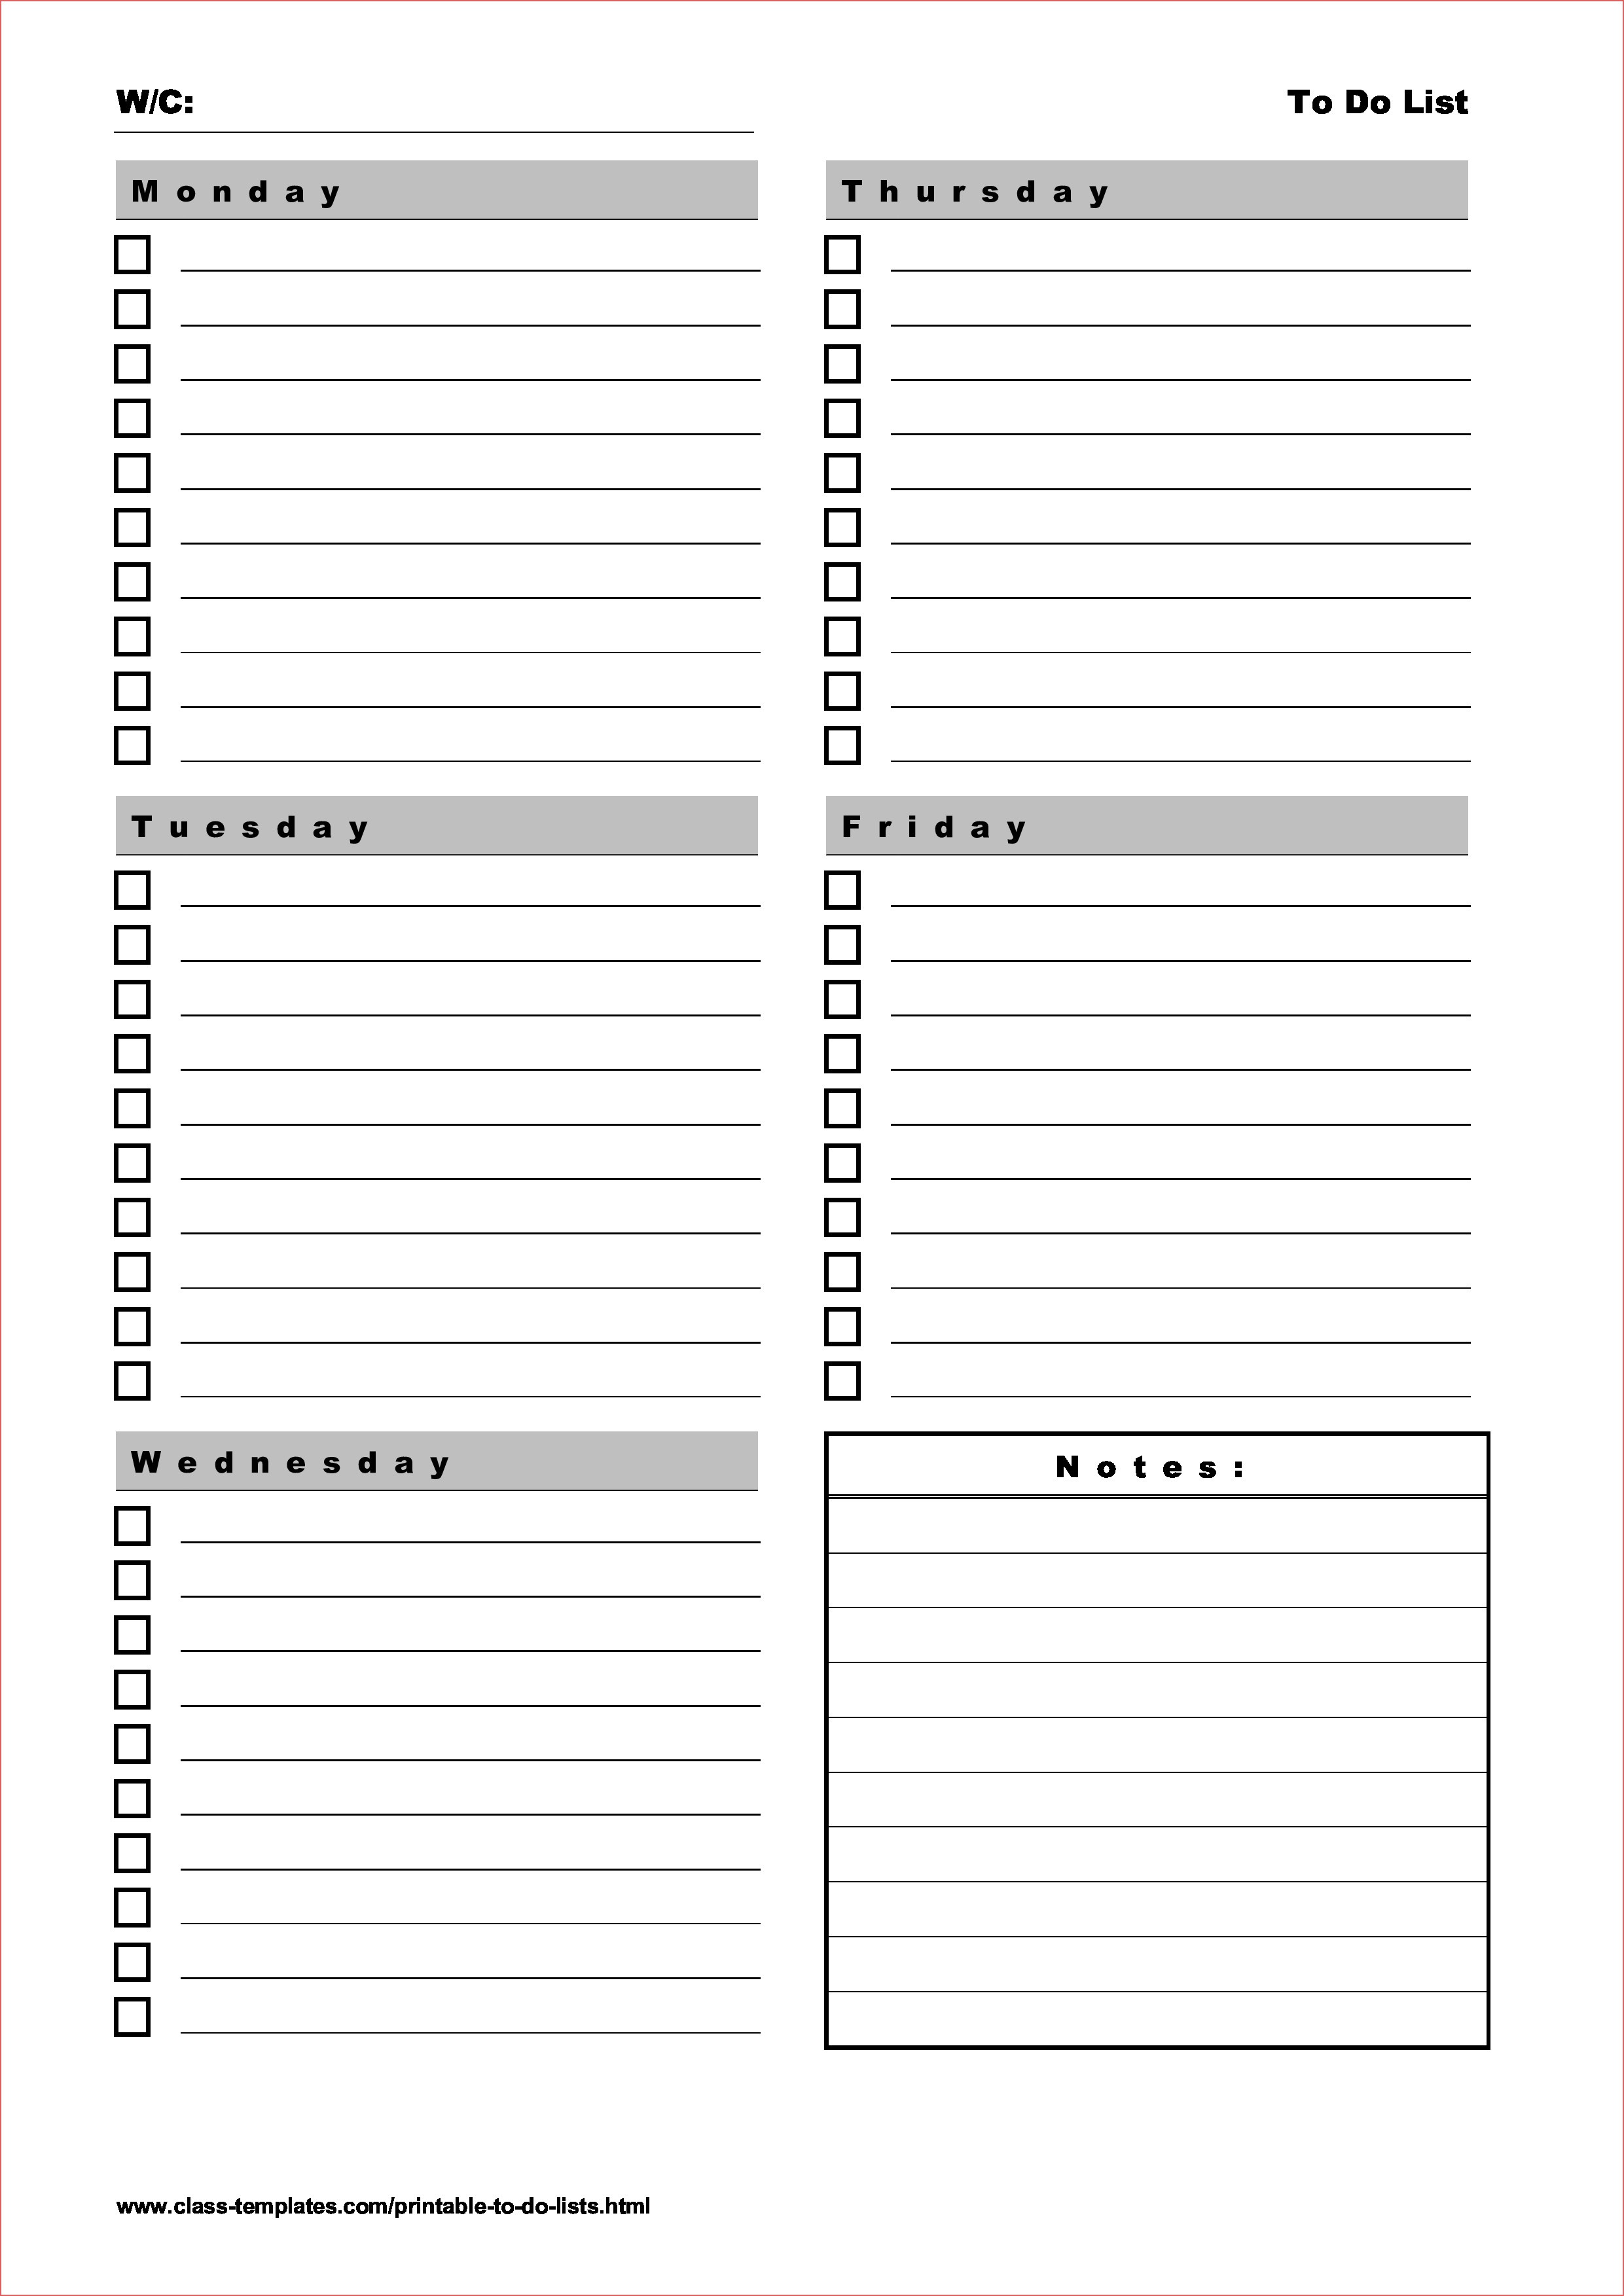 25 Free Printables To Help You Get Organized Calendar To Do List - Free Printable To Do Lists To Get Organized